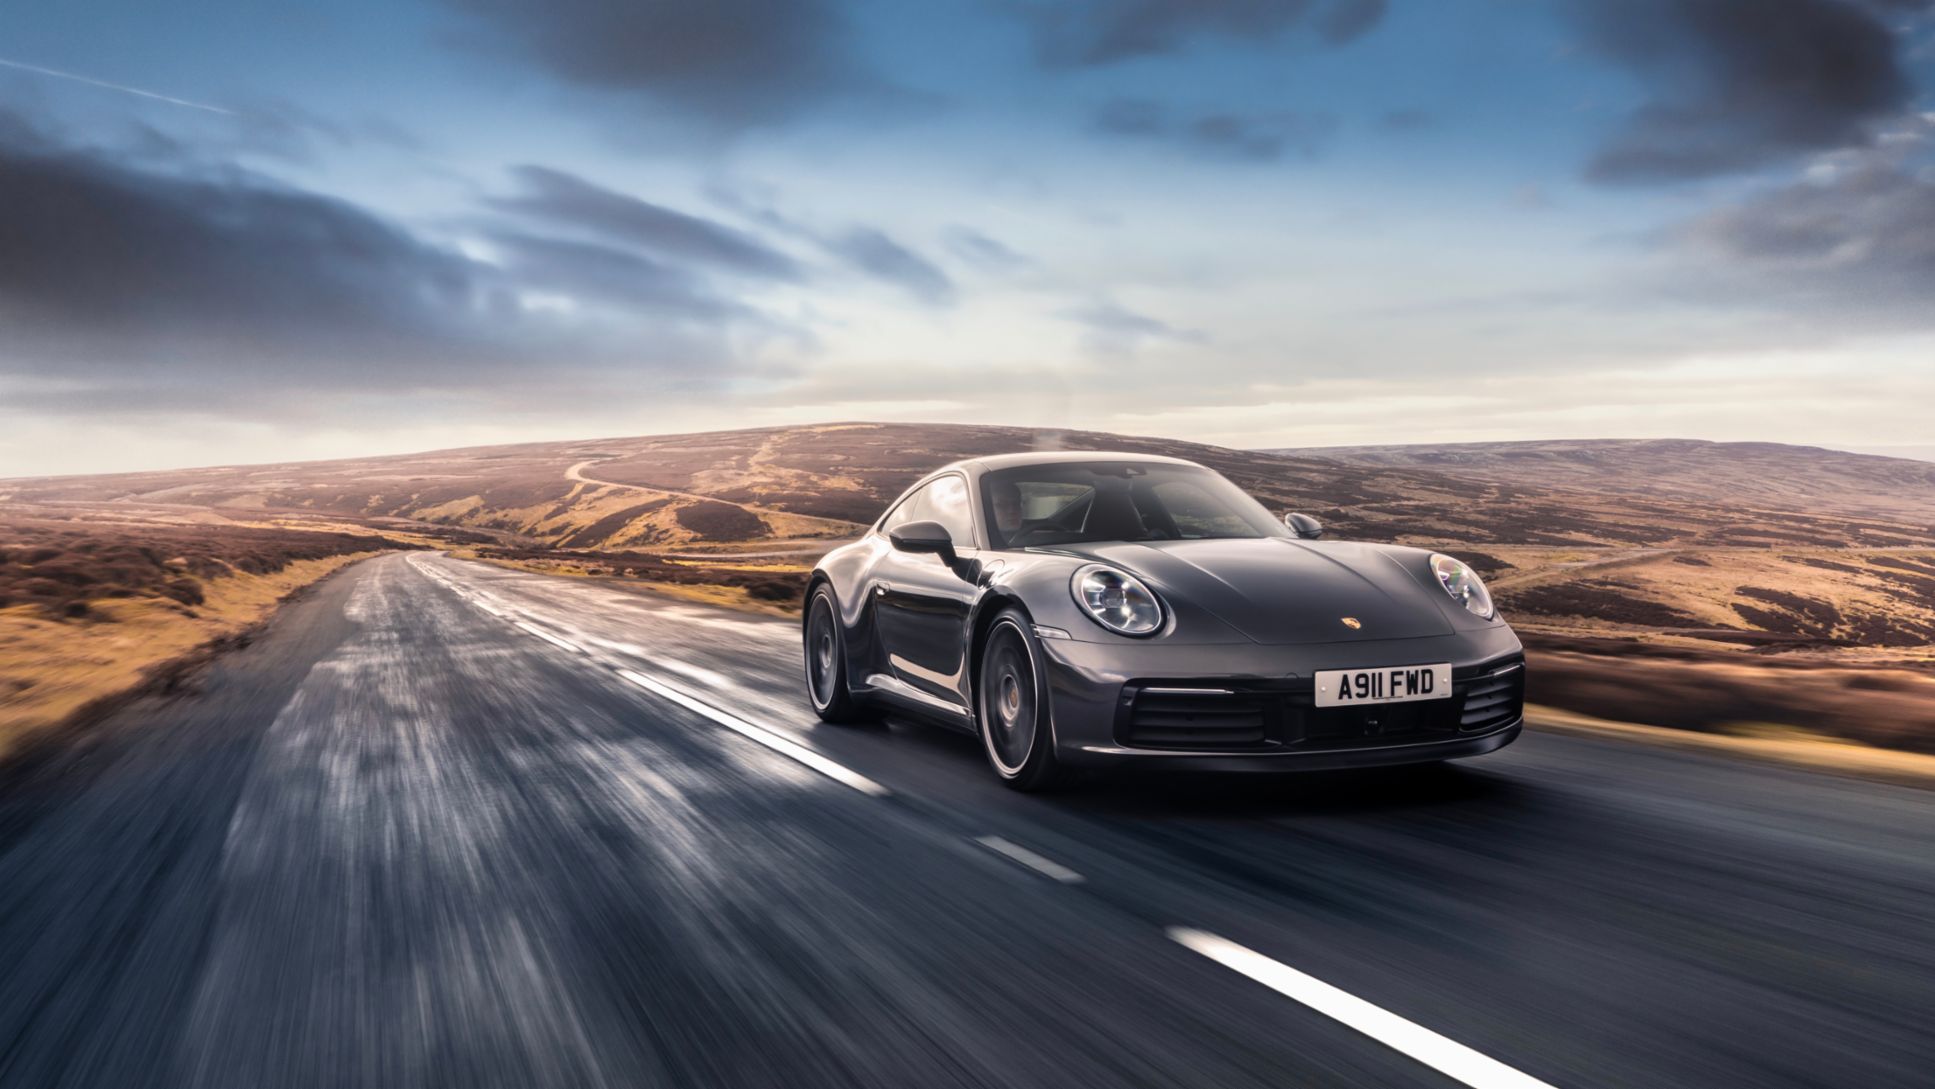 Five modes in one day – with the Porsche 911 - Porsche Newsroom